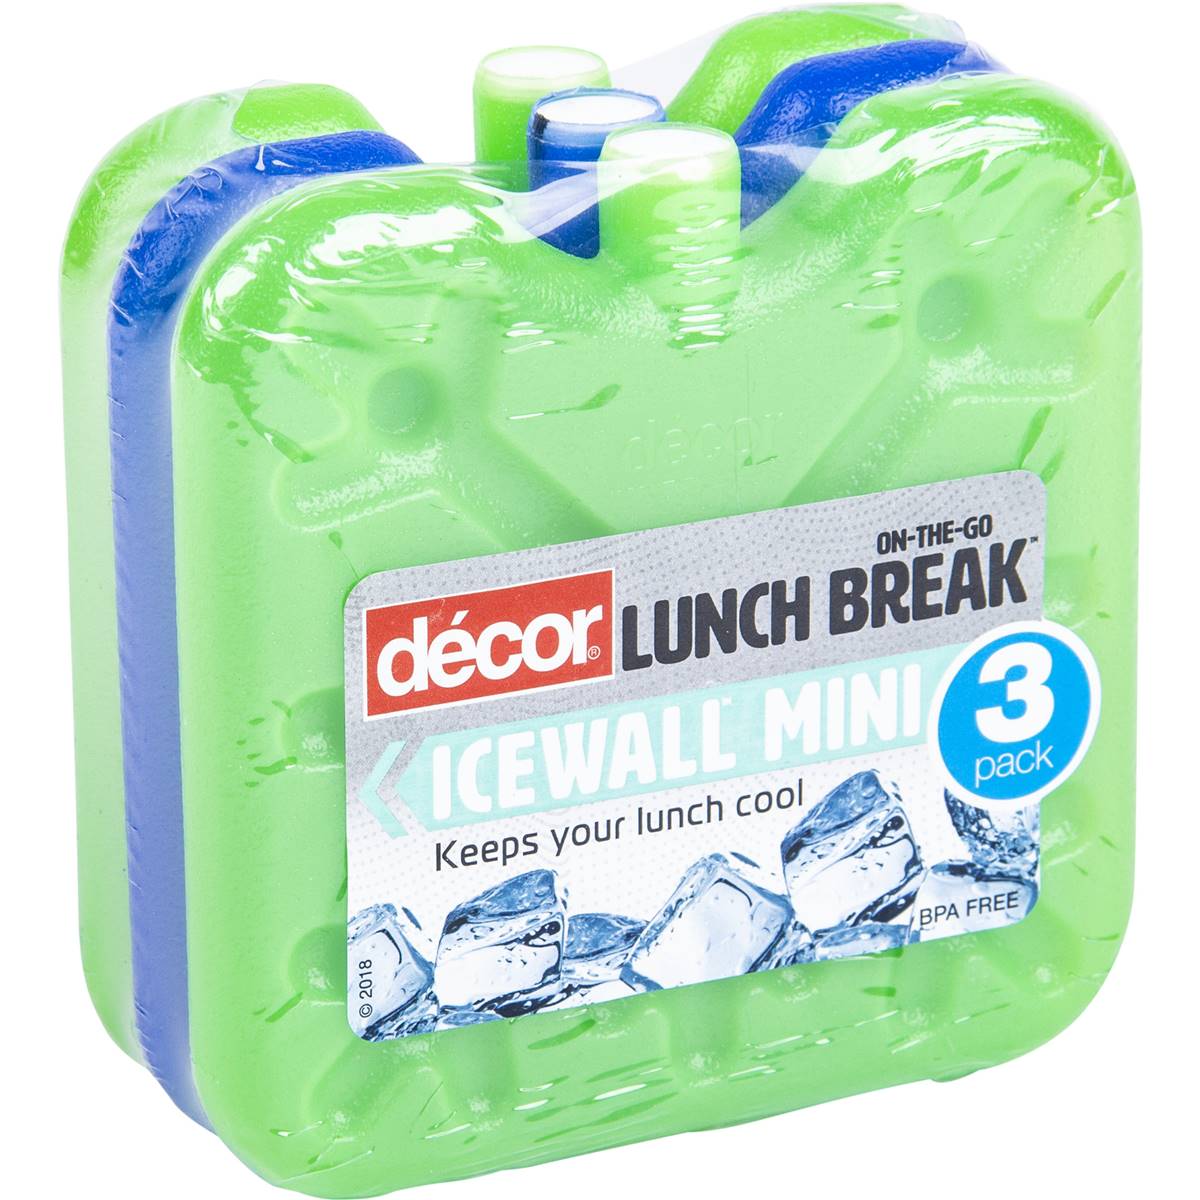 Decor Lunch Break Mini Ice Wall